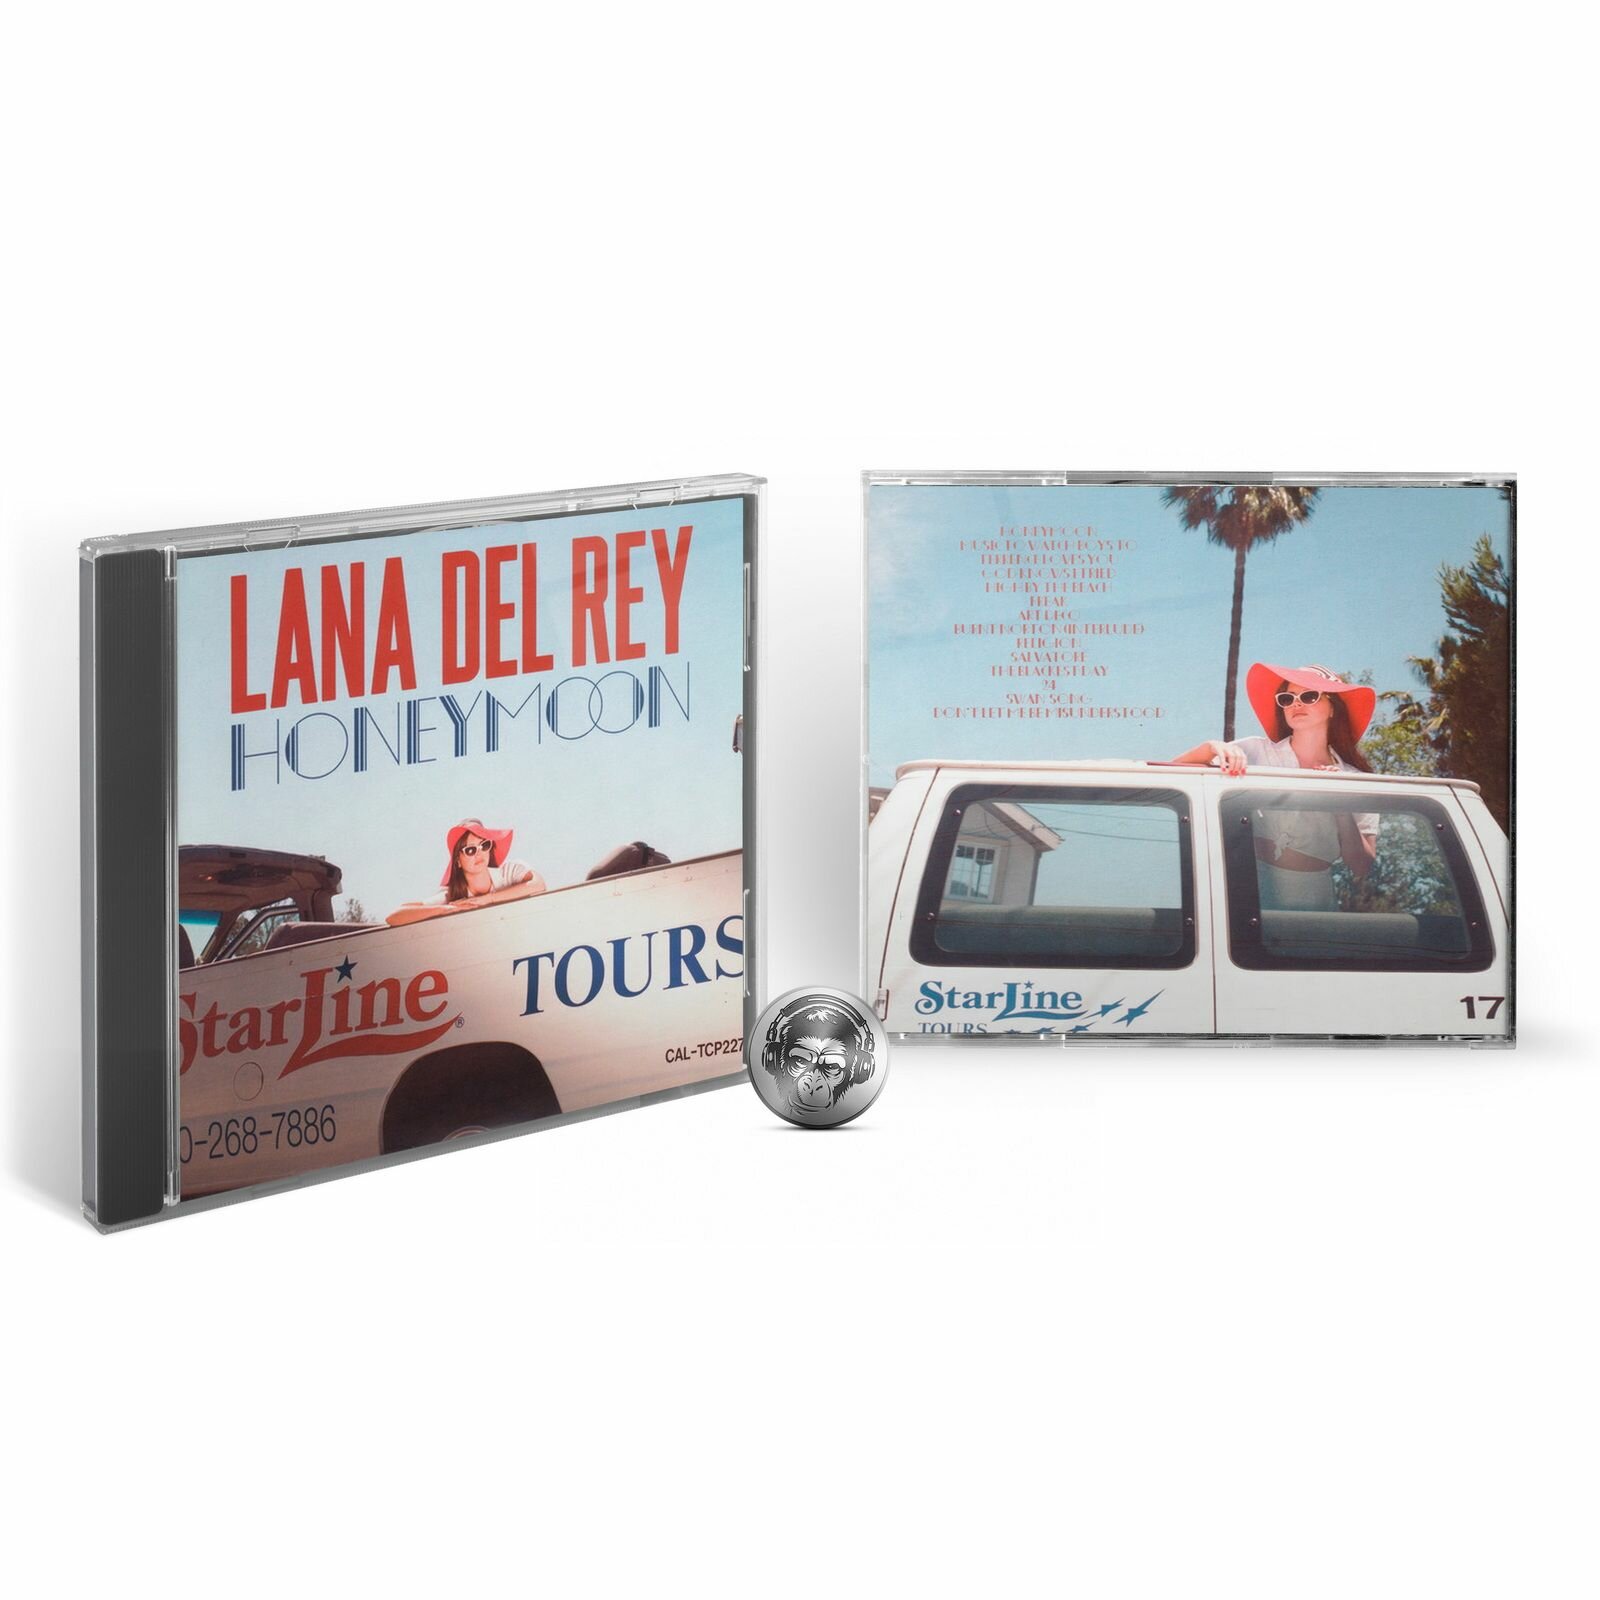 Lana Del Rey - Honeymoon (1CD) 2015 Polydor, Jewel Аудио диск